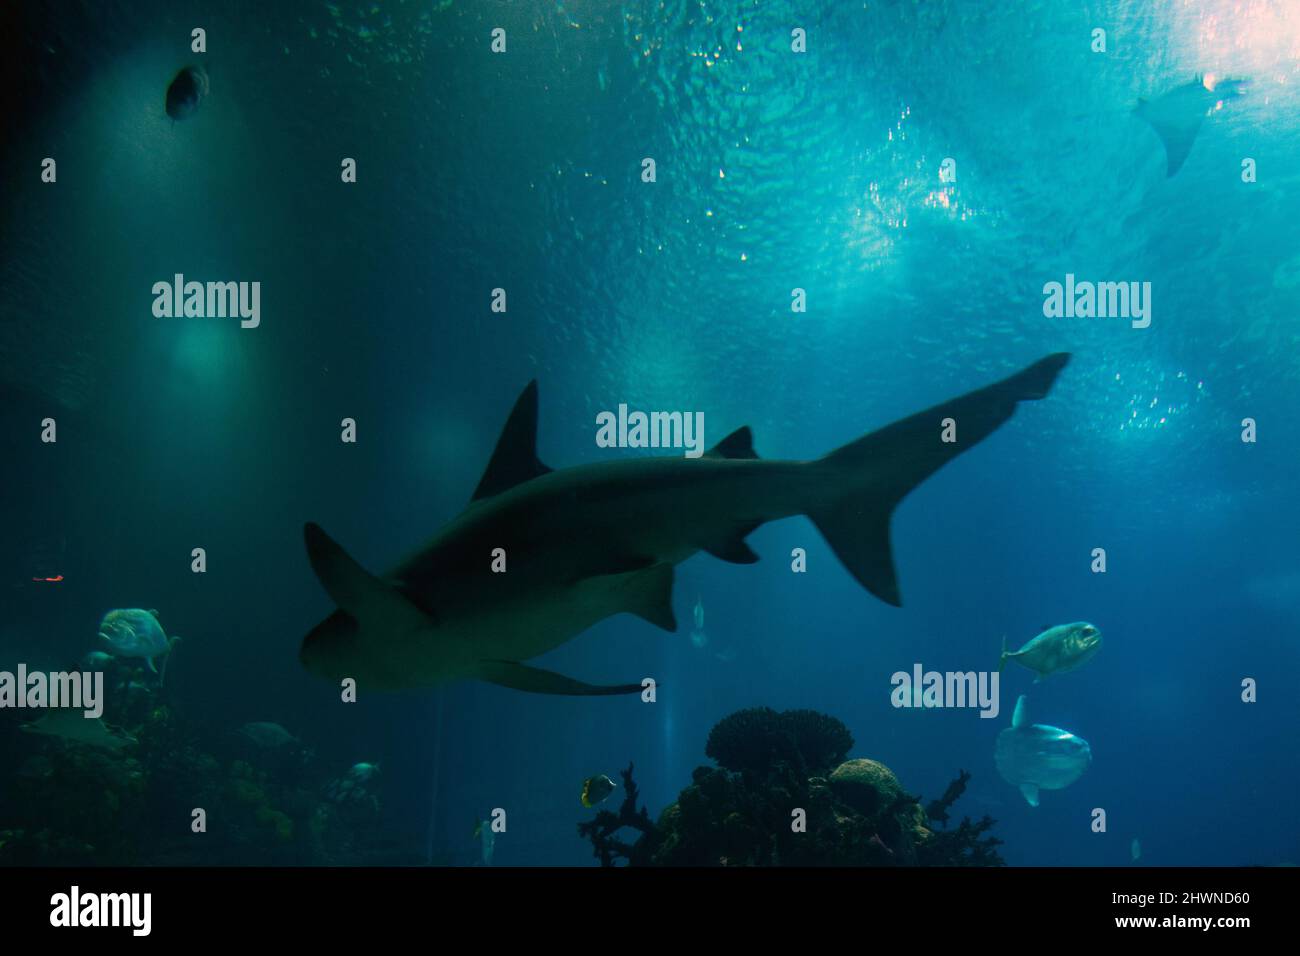 Medium size shark cruising the blue waters Stock Photo